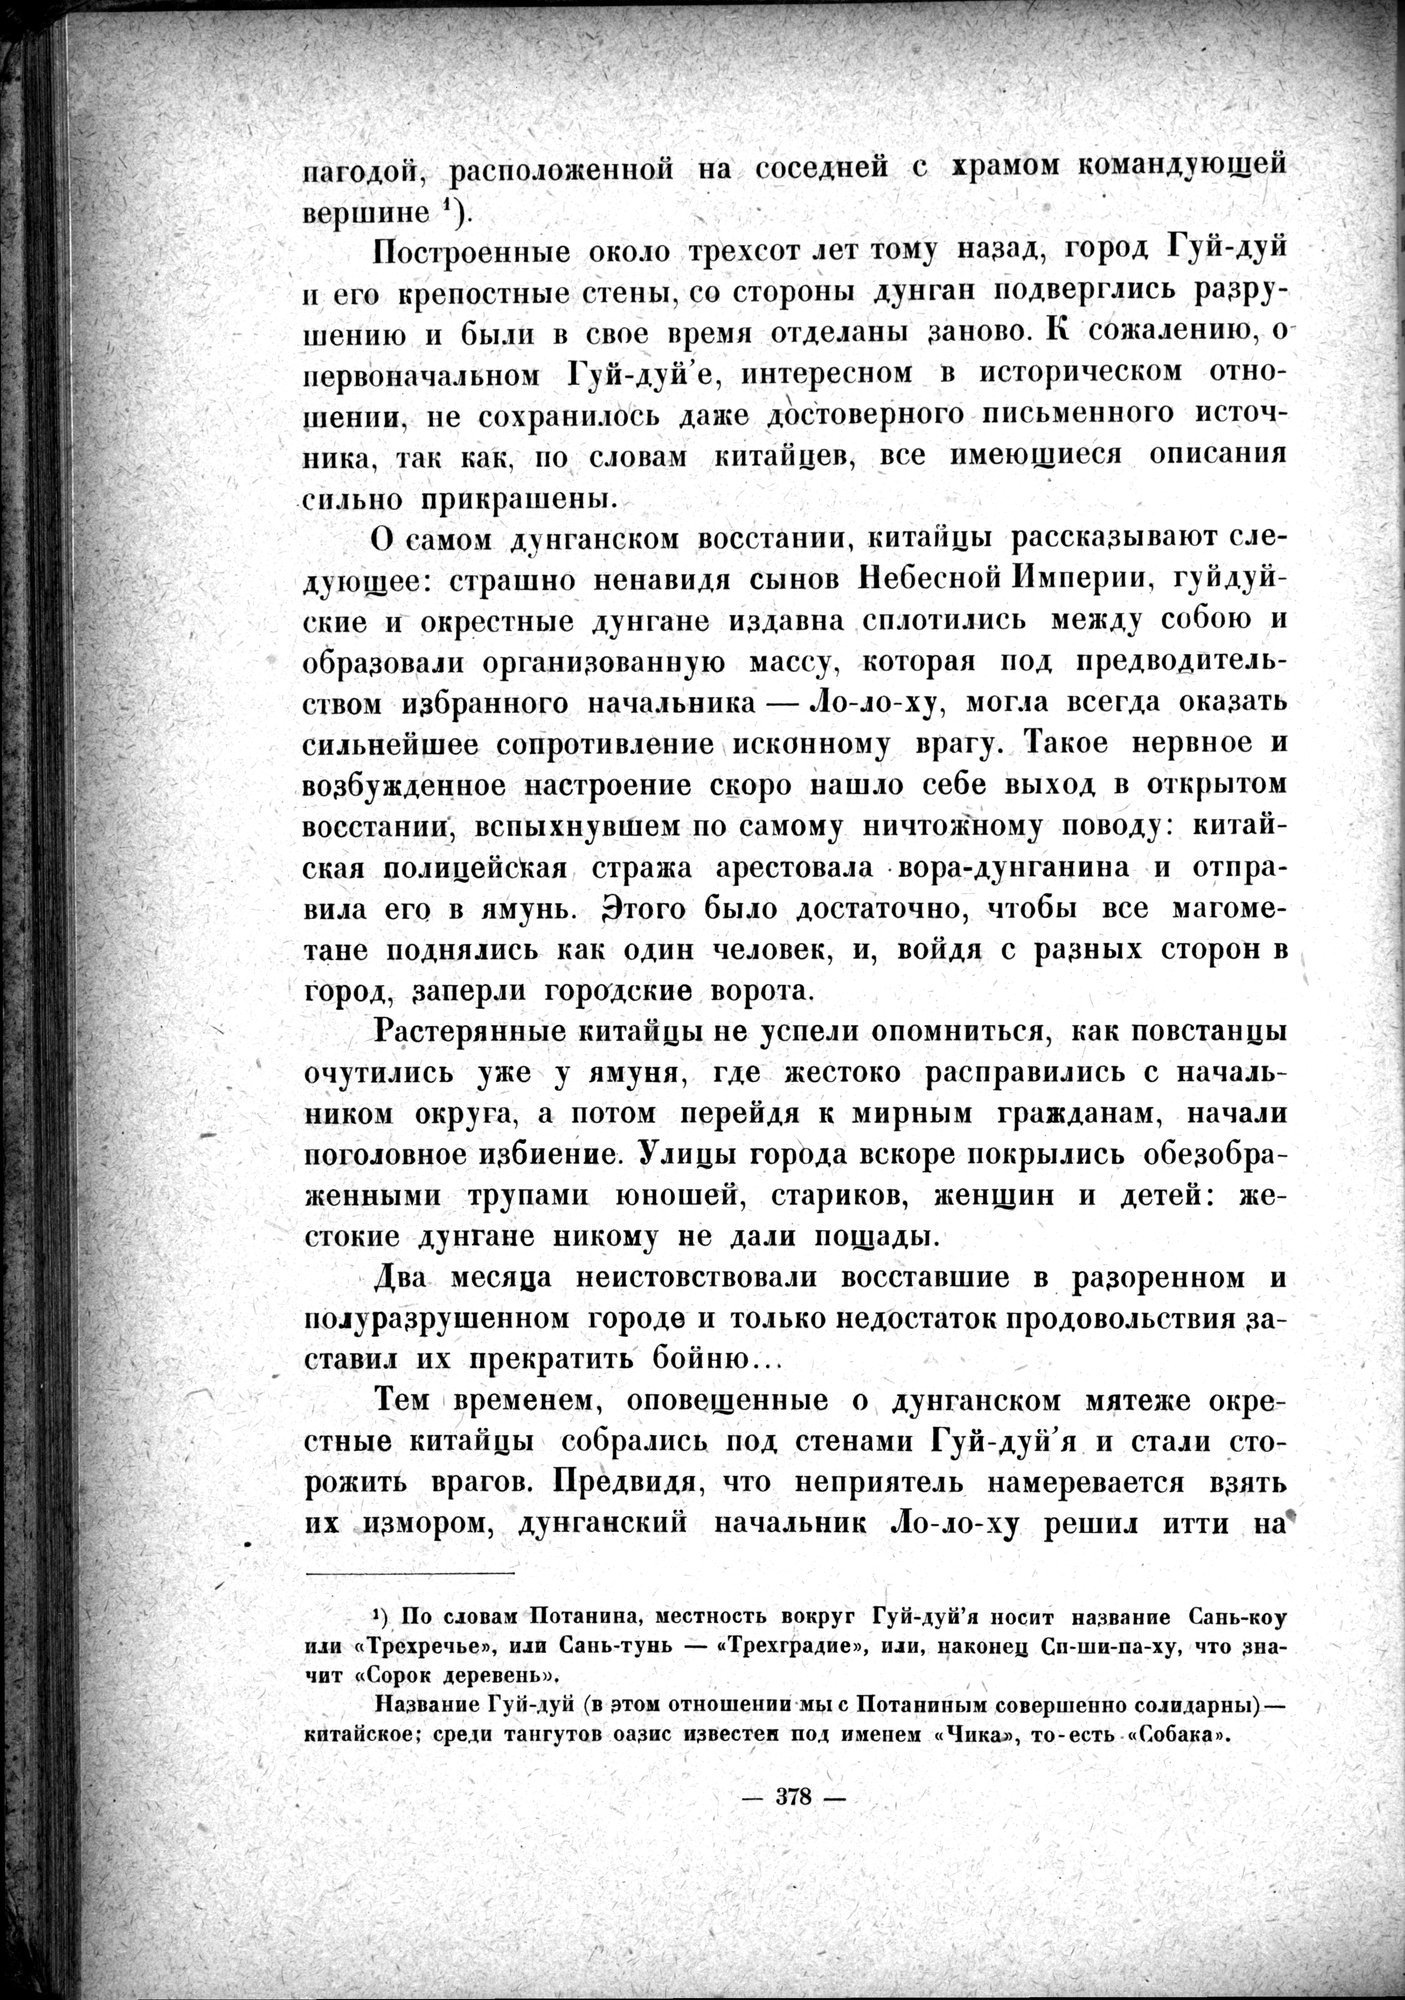 Mongoliya i Amdo i mertby gorod Khara-Khoto : vol.1 / Page 430 (Grayscale High Resolution Image)